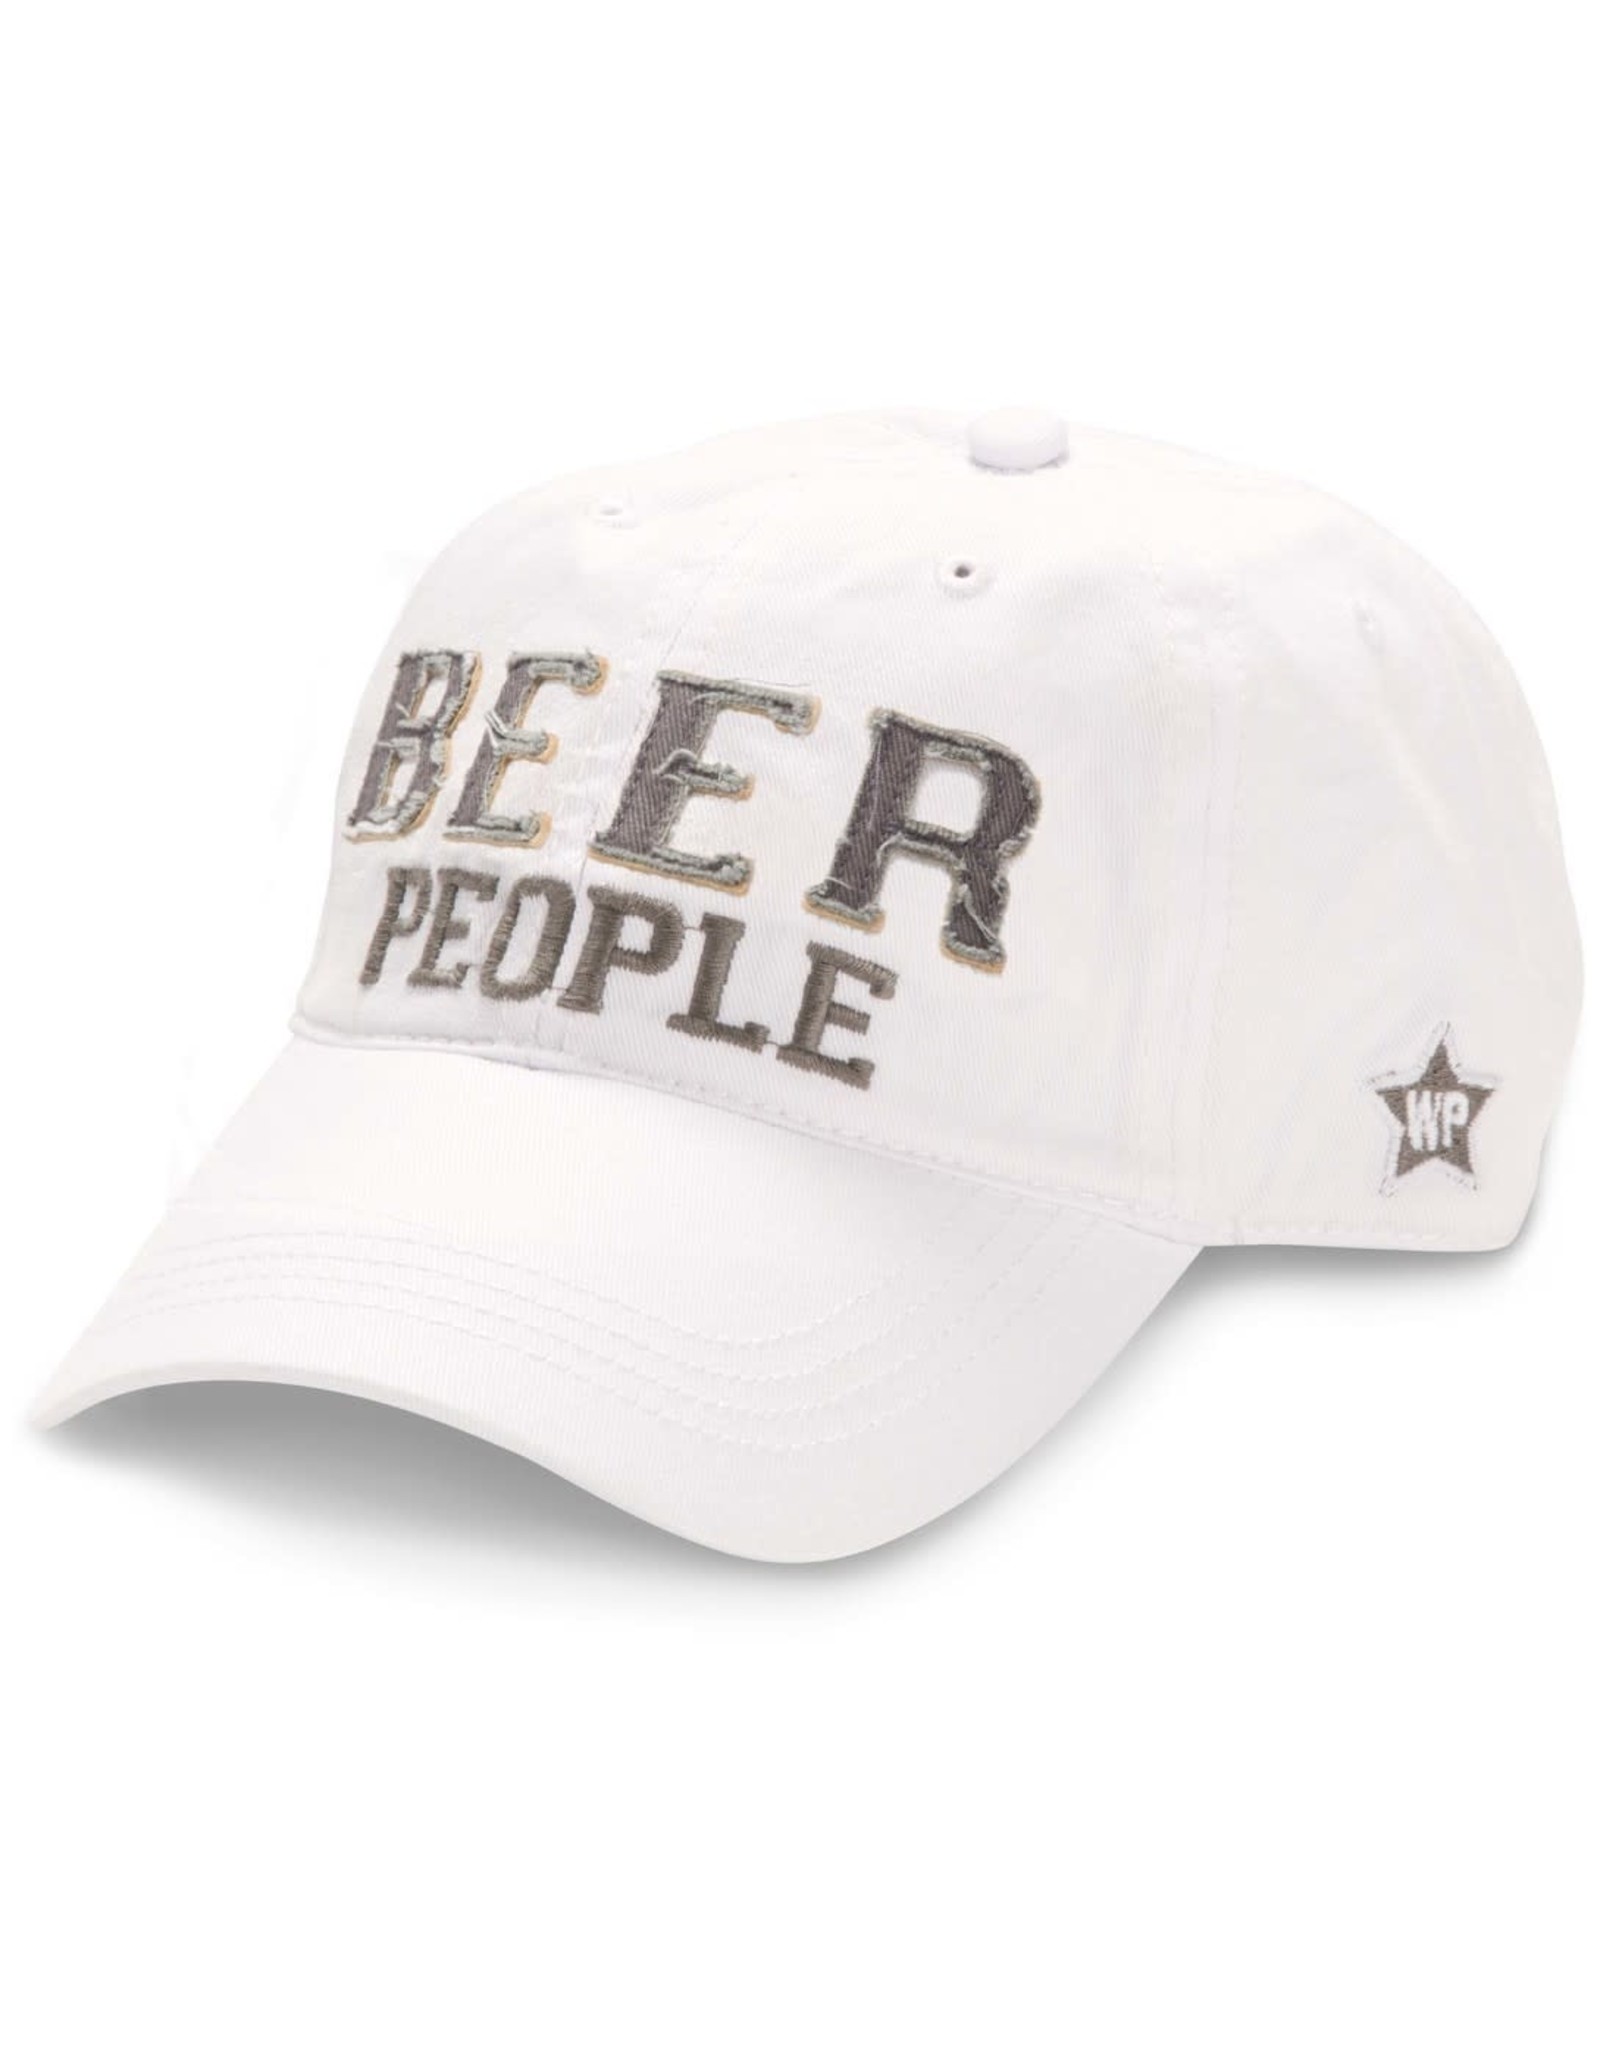 We People Beer People Ball Hat, white